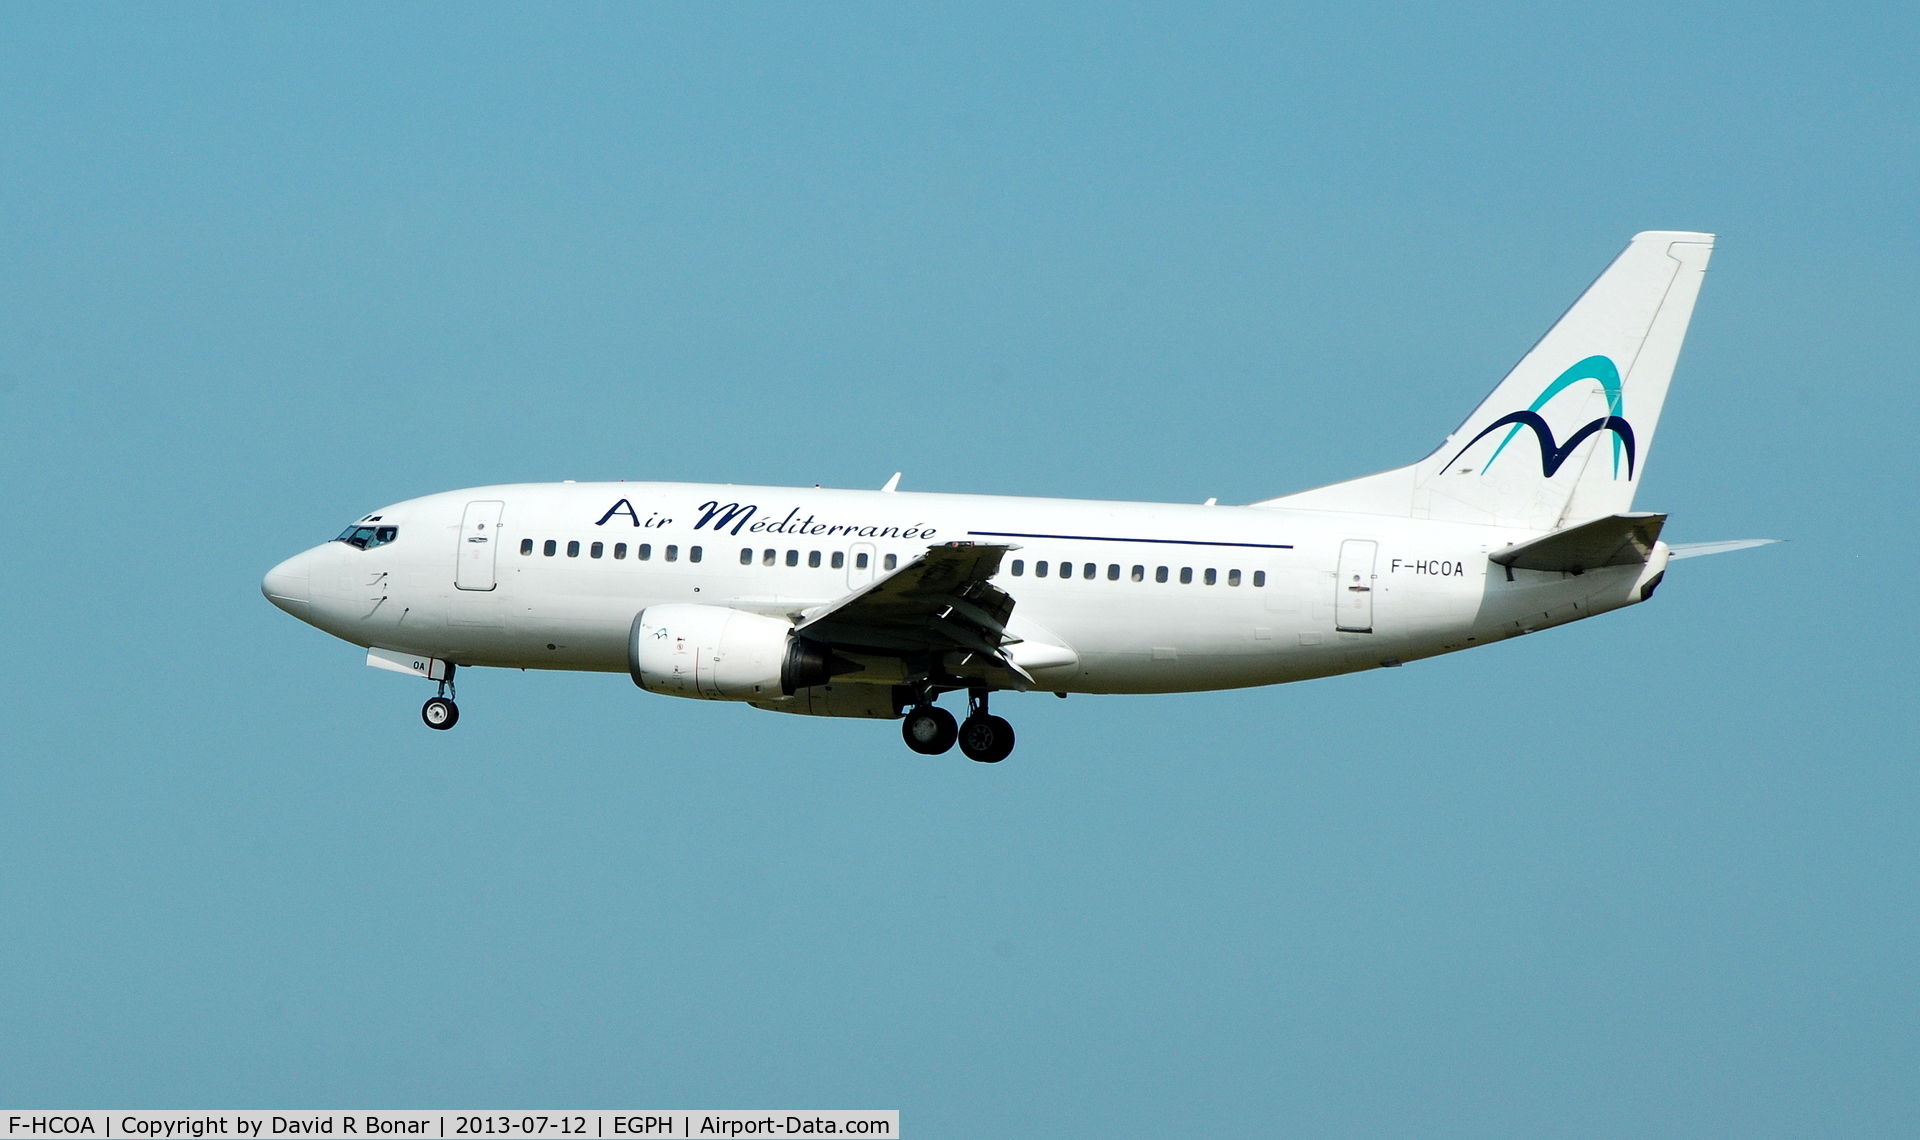 F-HCOA, 1996 Boeing 737-5L9 C/N 28084, In-bound charter from Lourdes